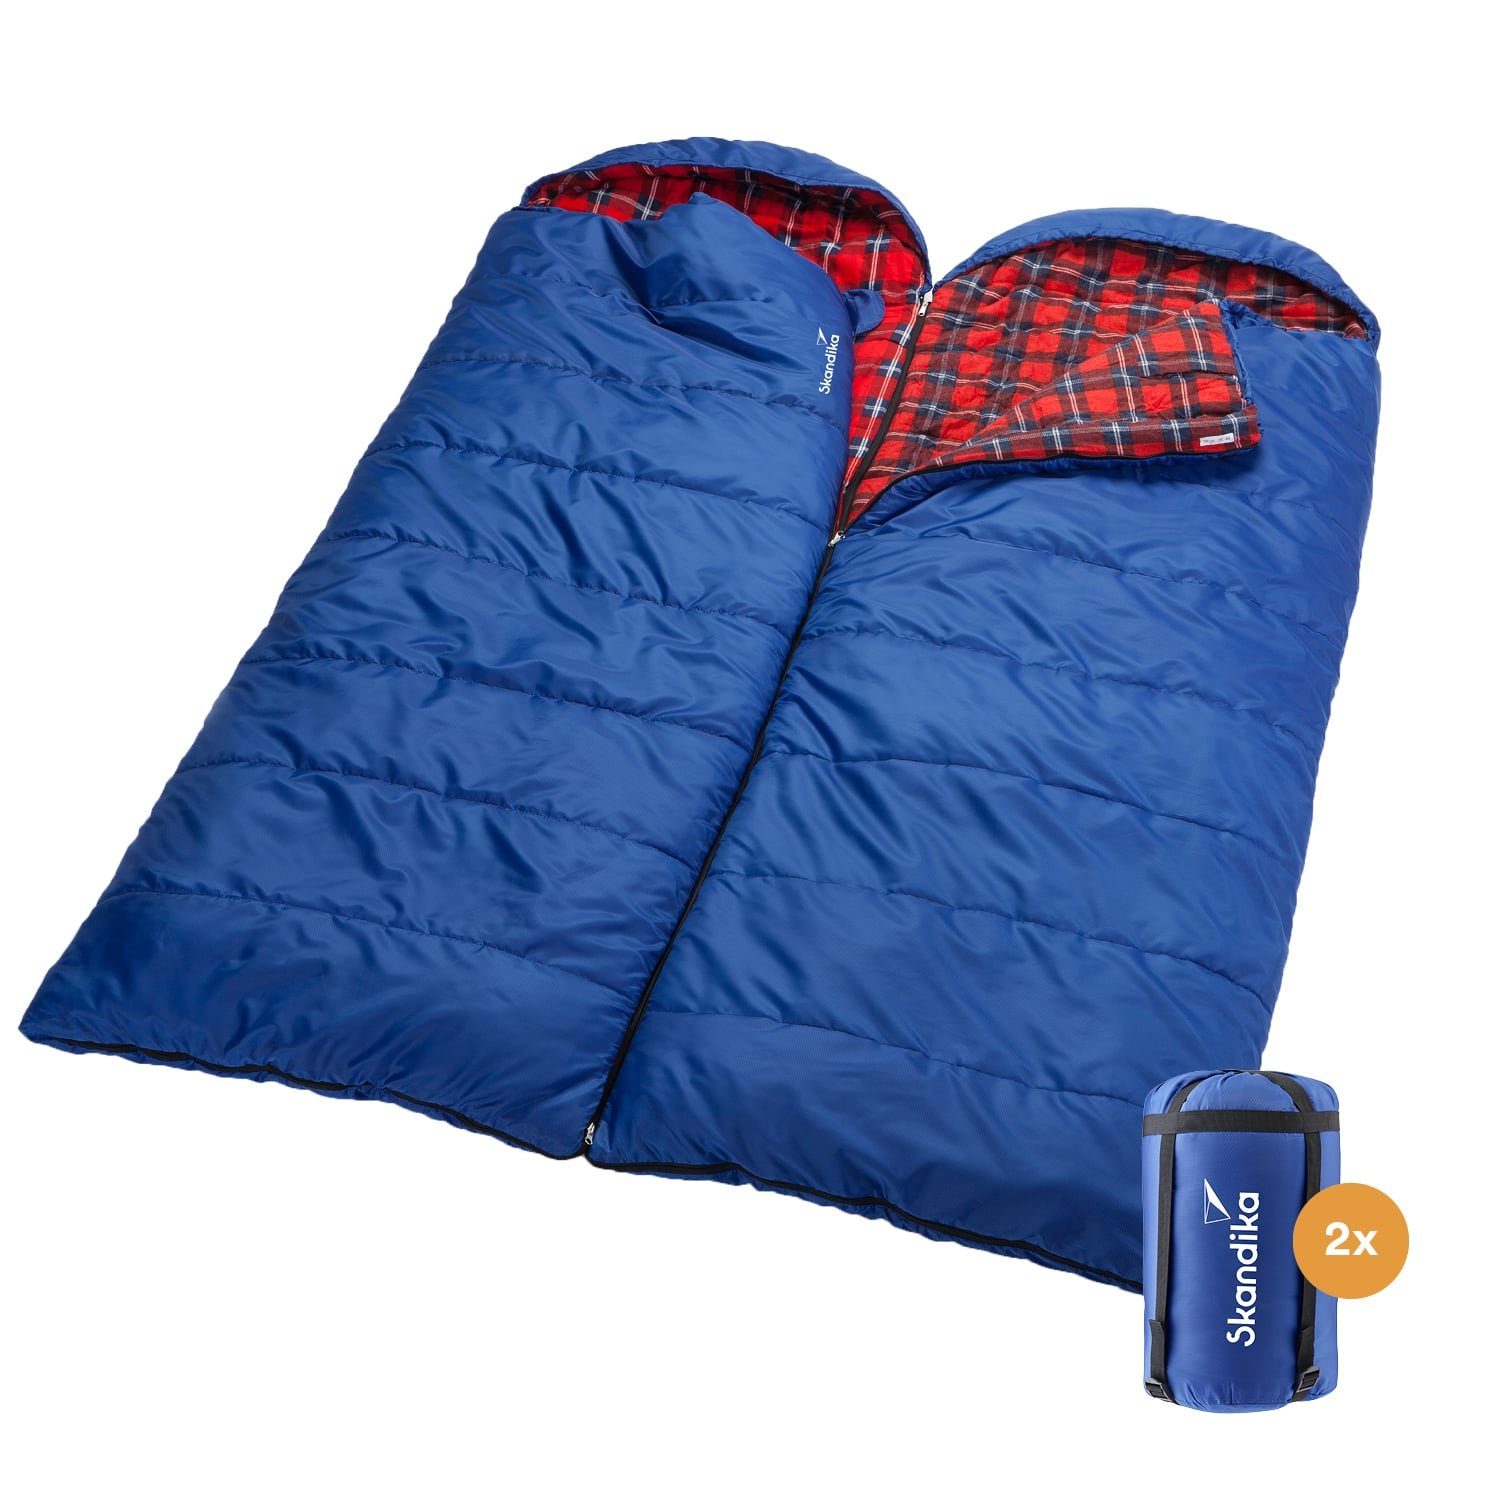 Skandika Schlafsack »Deckenschlafsack Dundee 2er-Set blau«  (wasserabweisend, atmungsaktiv, Extrem-Temperaturbereich: -20°C, Outdoor,  Camping), Rundum Reißverschluss, koppelbar, Reißverschlussabdeckung